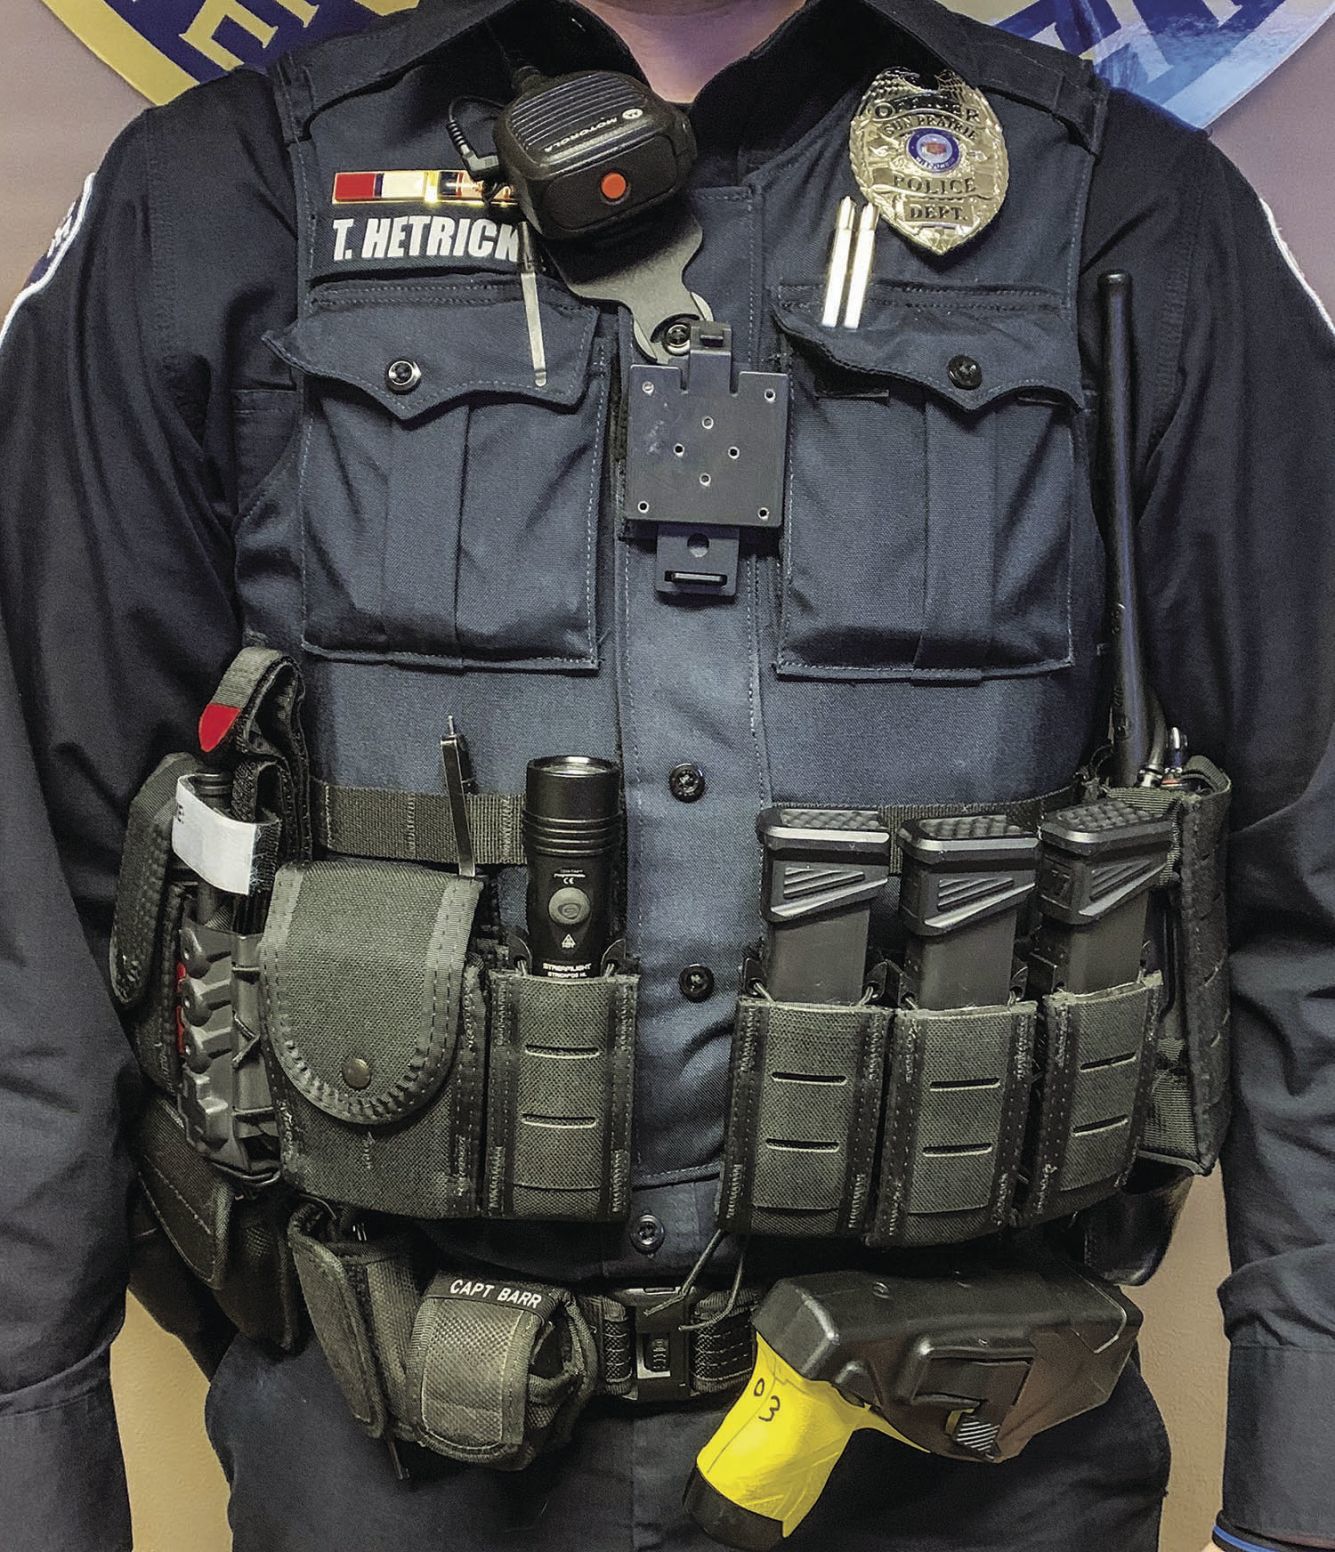 SPPD transitioning to load-bearing officer vests | News | hngnews.com